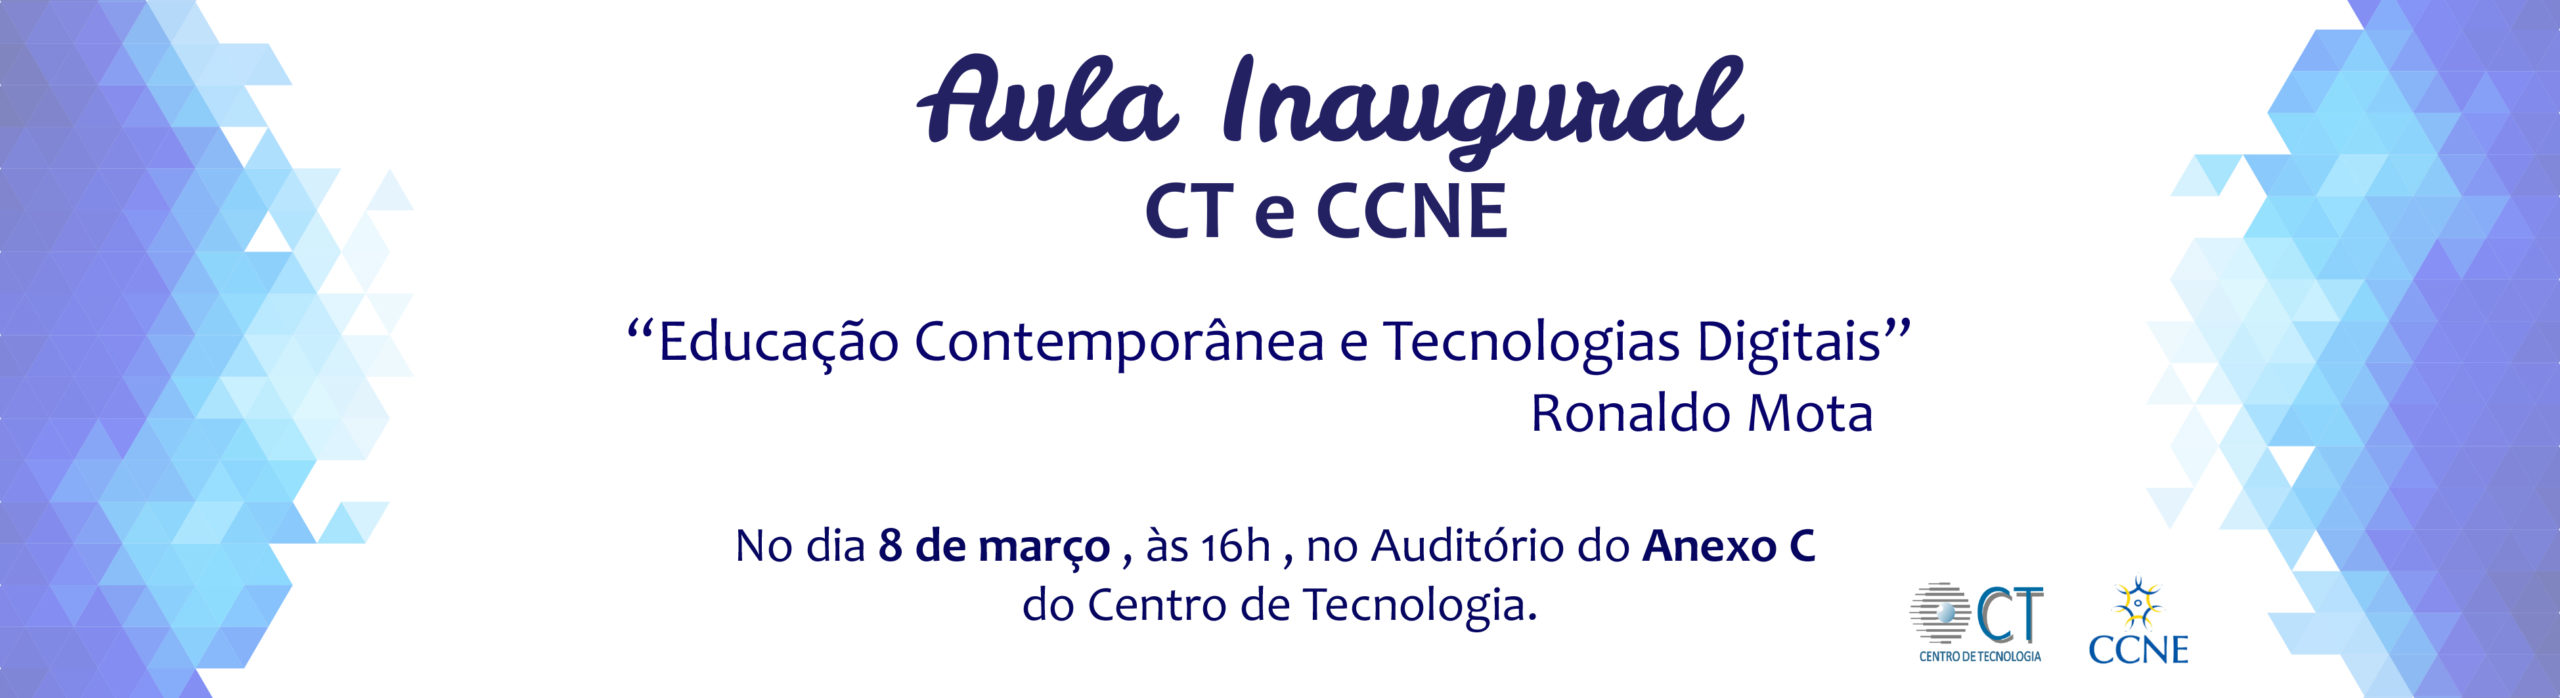 Banner Web aula inaugural CT CCNE 1